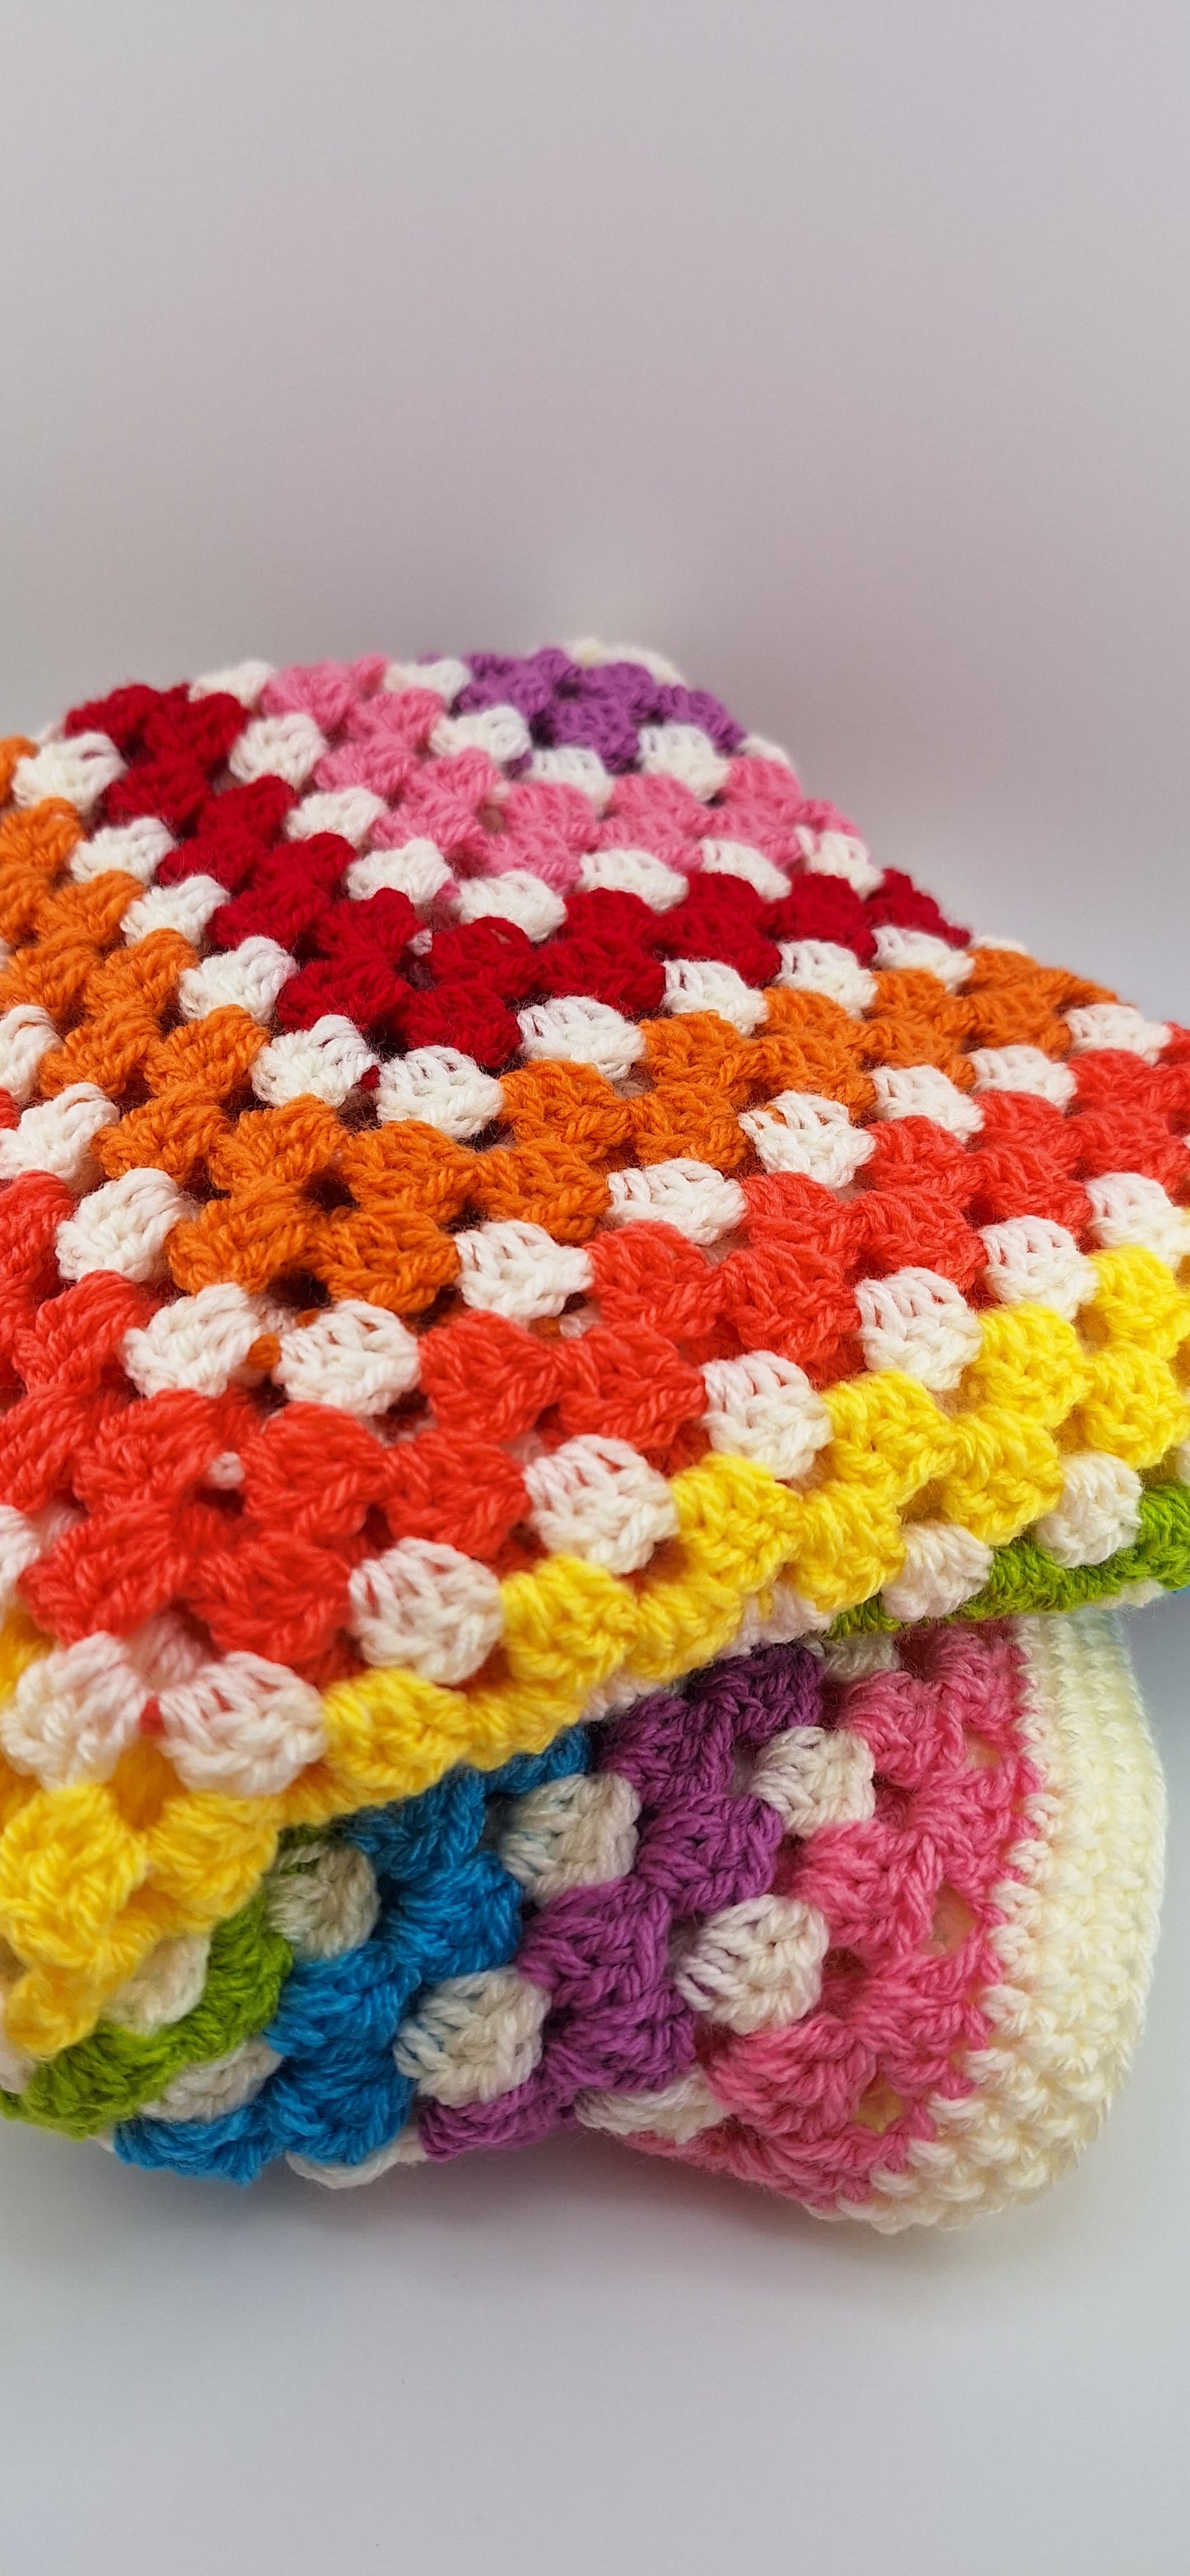 Crochet Granny Square Baby Blanket - The Fresh Rainbow